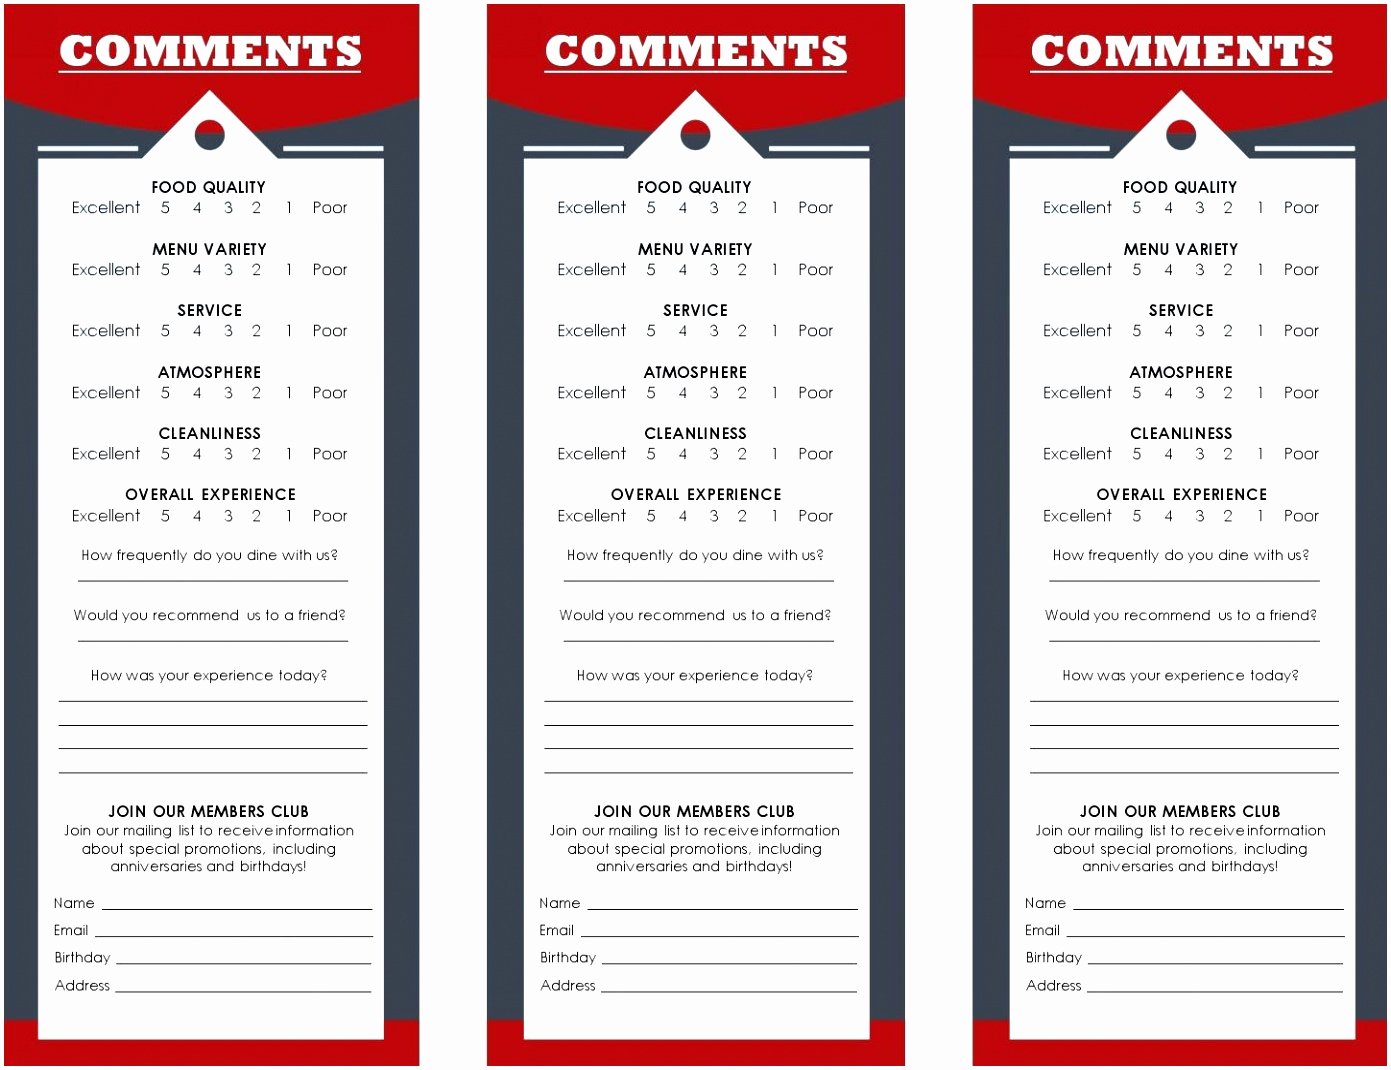 Customer Comment Card Template Unique 9 Restaurant Ment Card Template Vrtwi